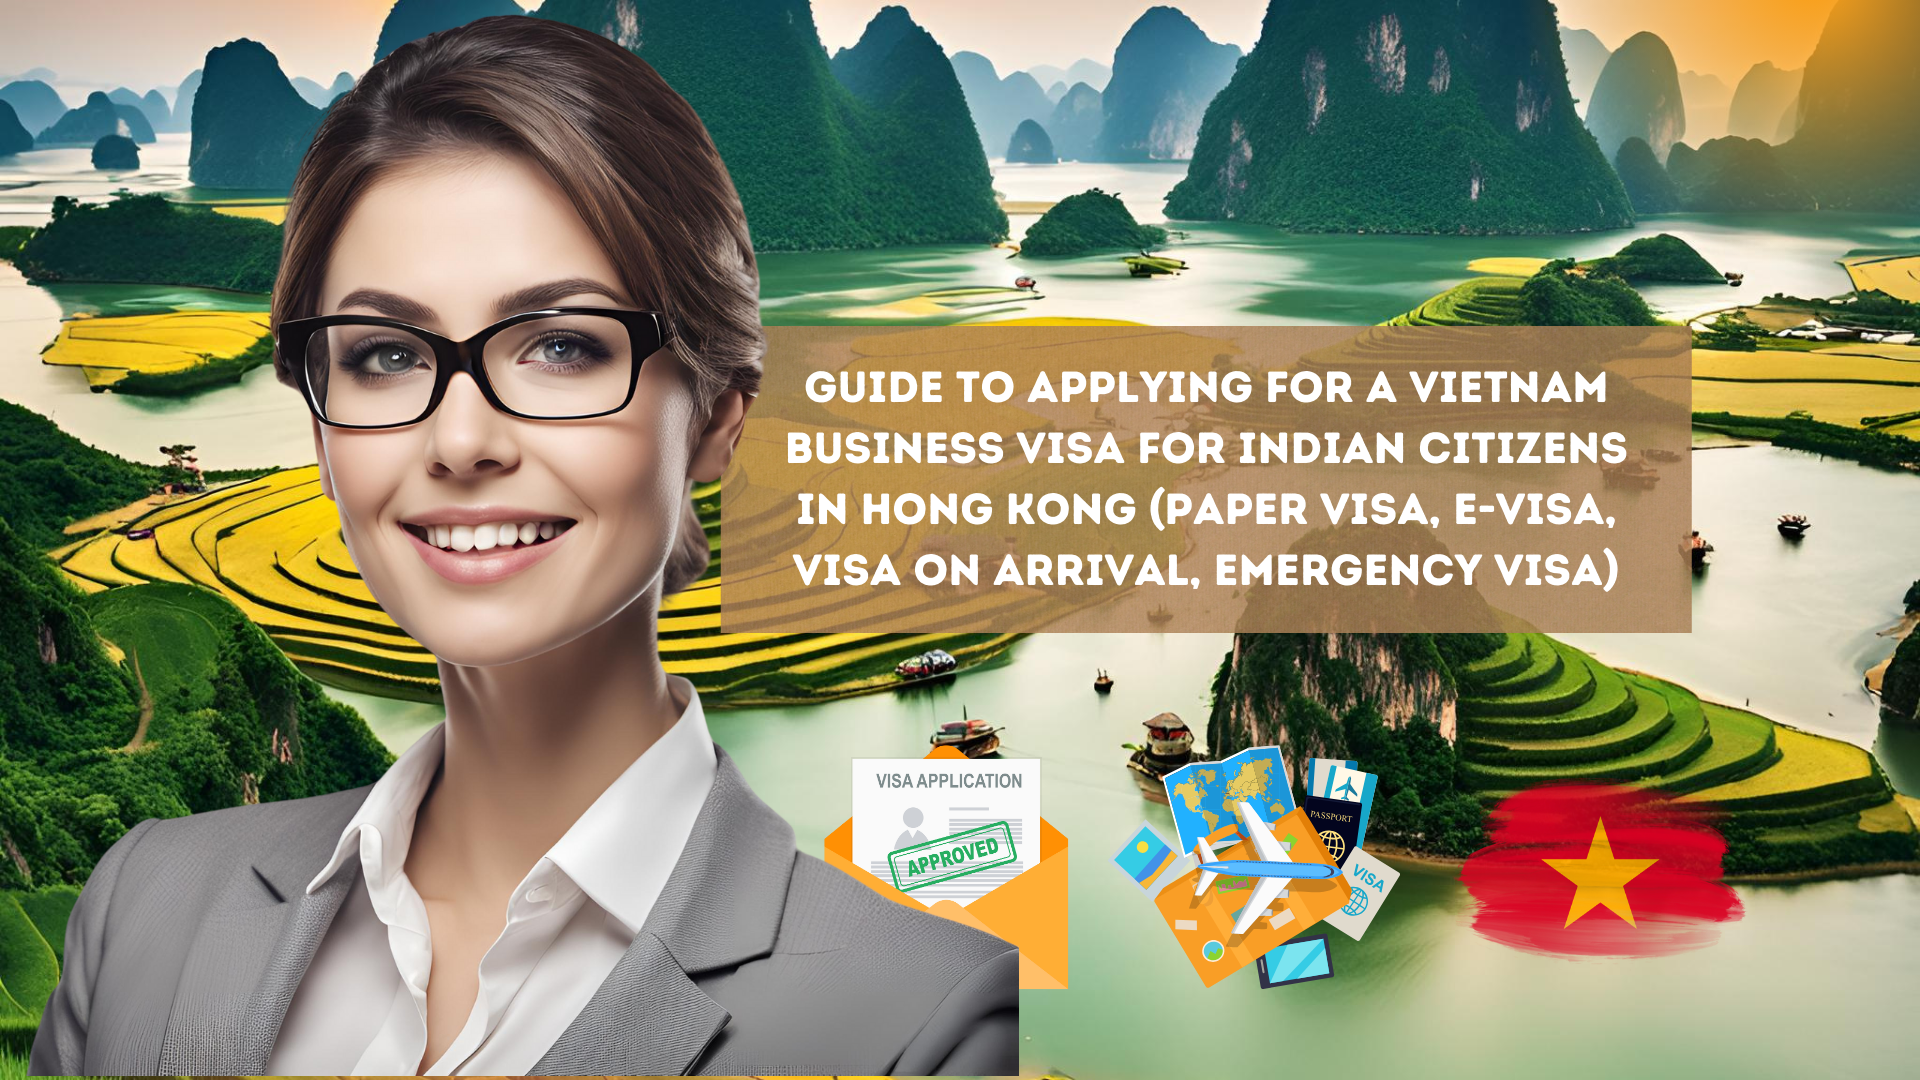 Guide to applying for a Vietnam business visa for Indian citizens in Hong Kong (paper visa, e-visa, visa on arrival, emergency visa)